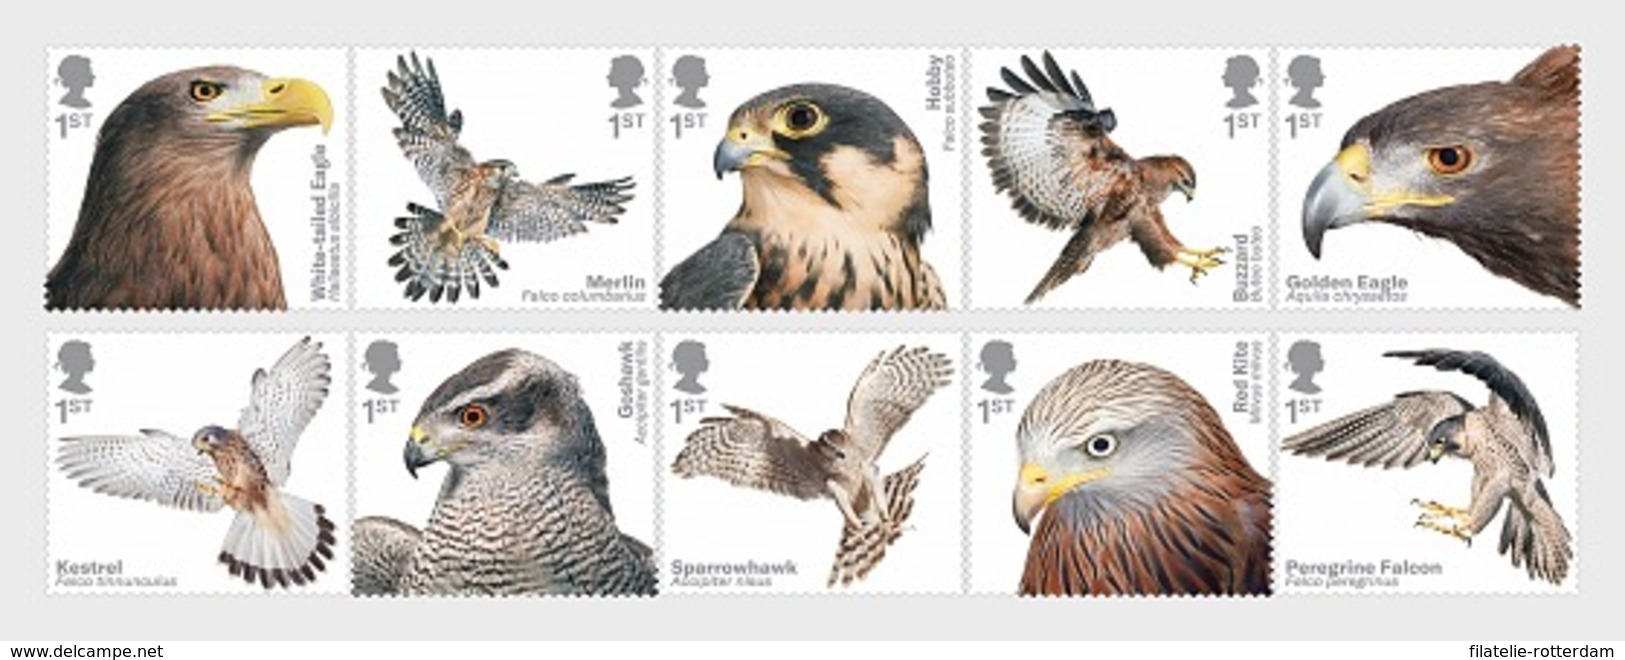 Groot-Brittannië / Great Britain - Postfris/MNH - Complete Set Roofvogels 2019 - Ongebruikt